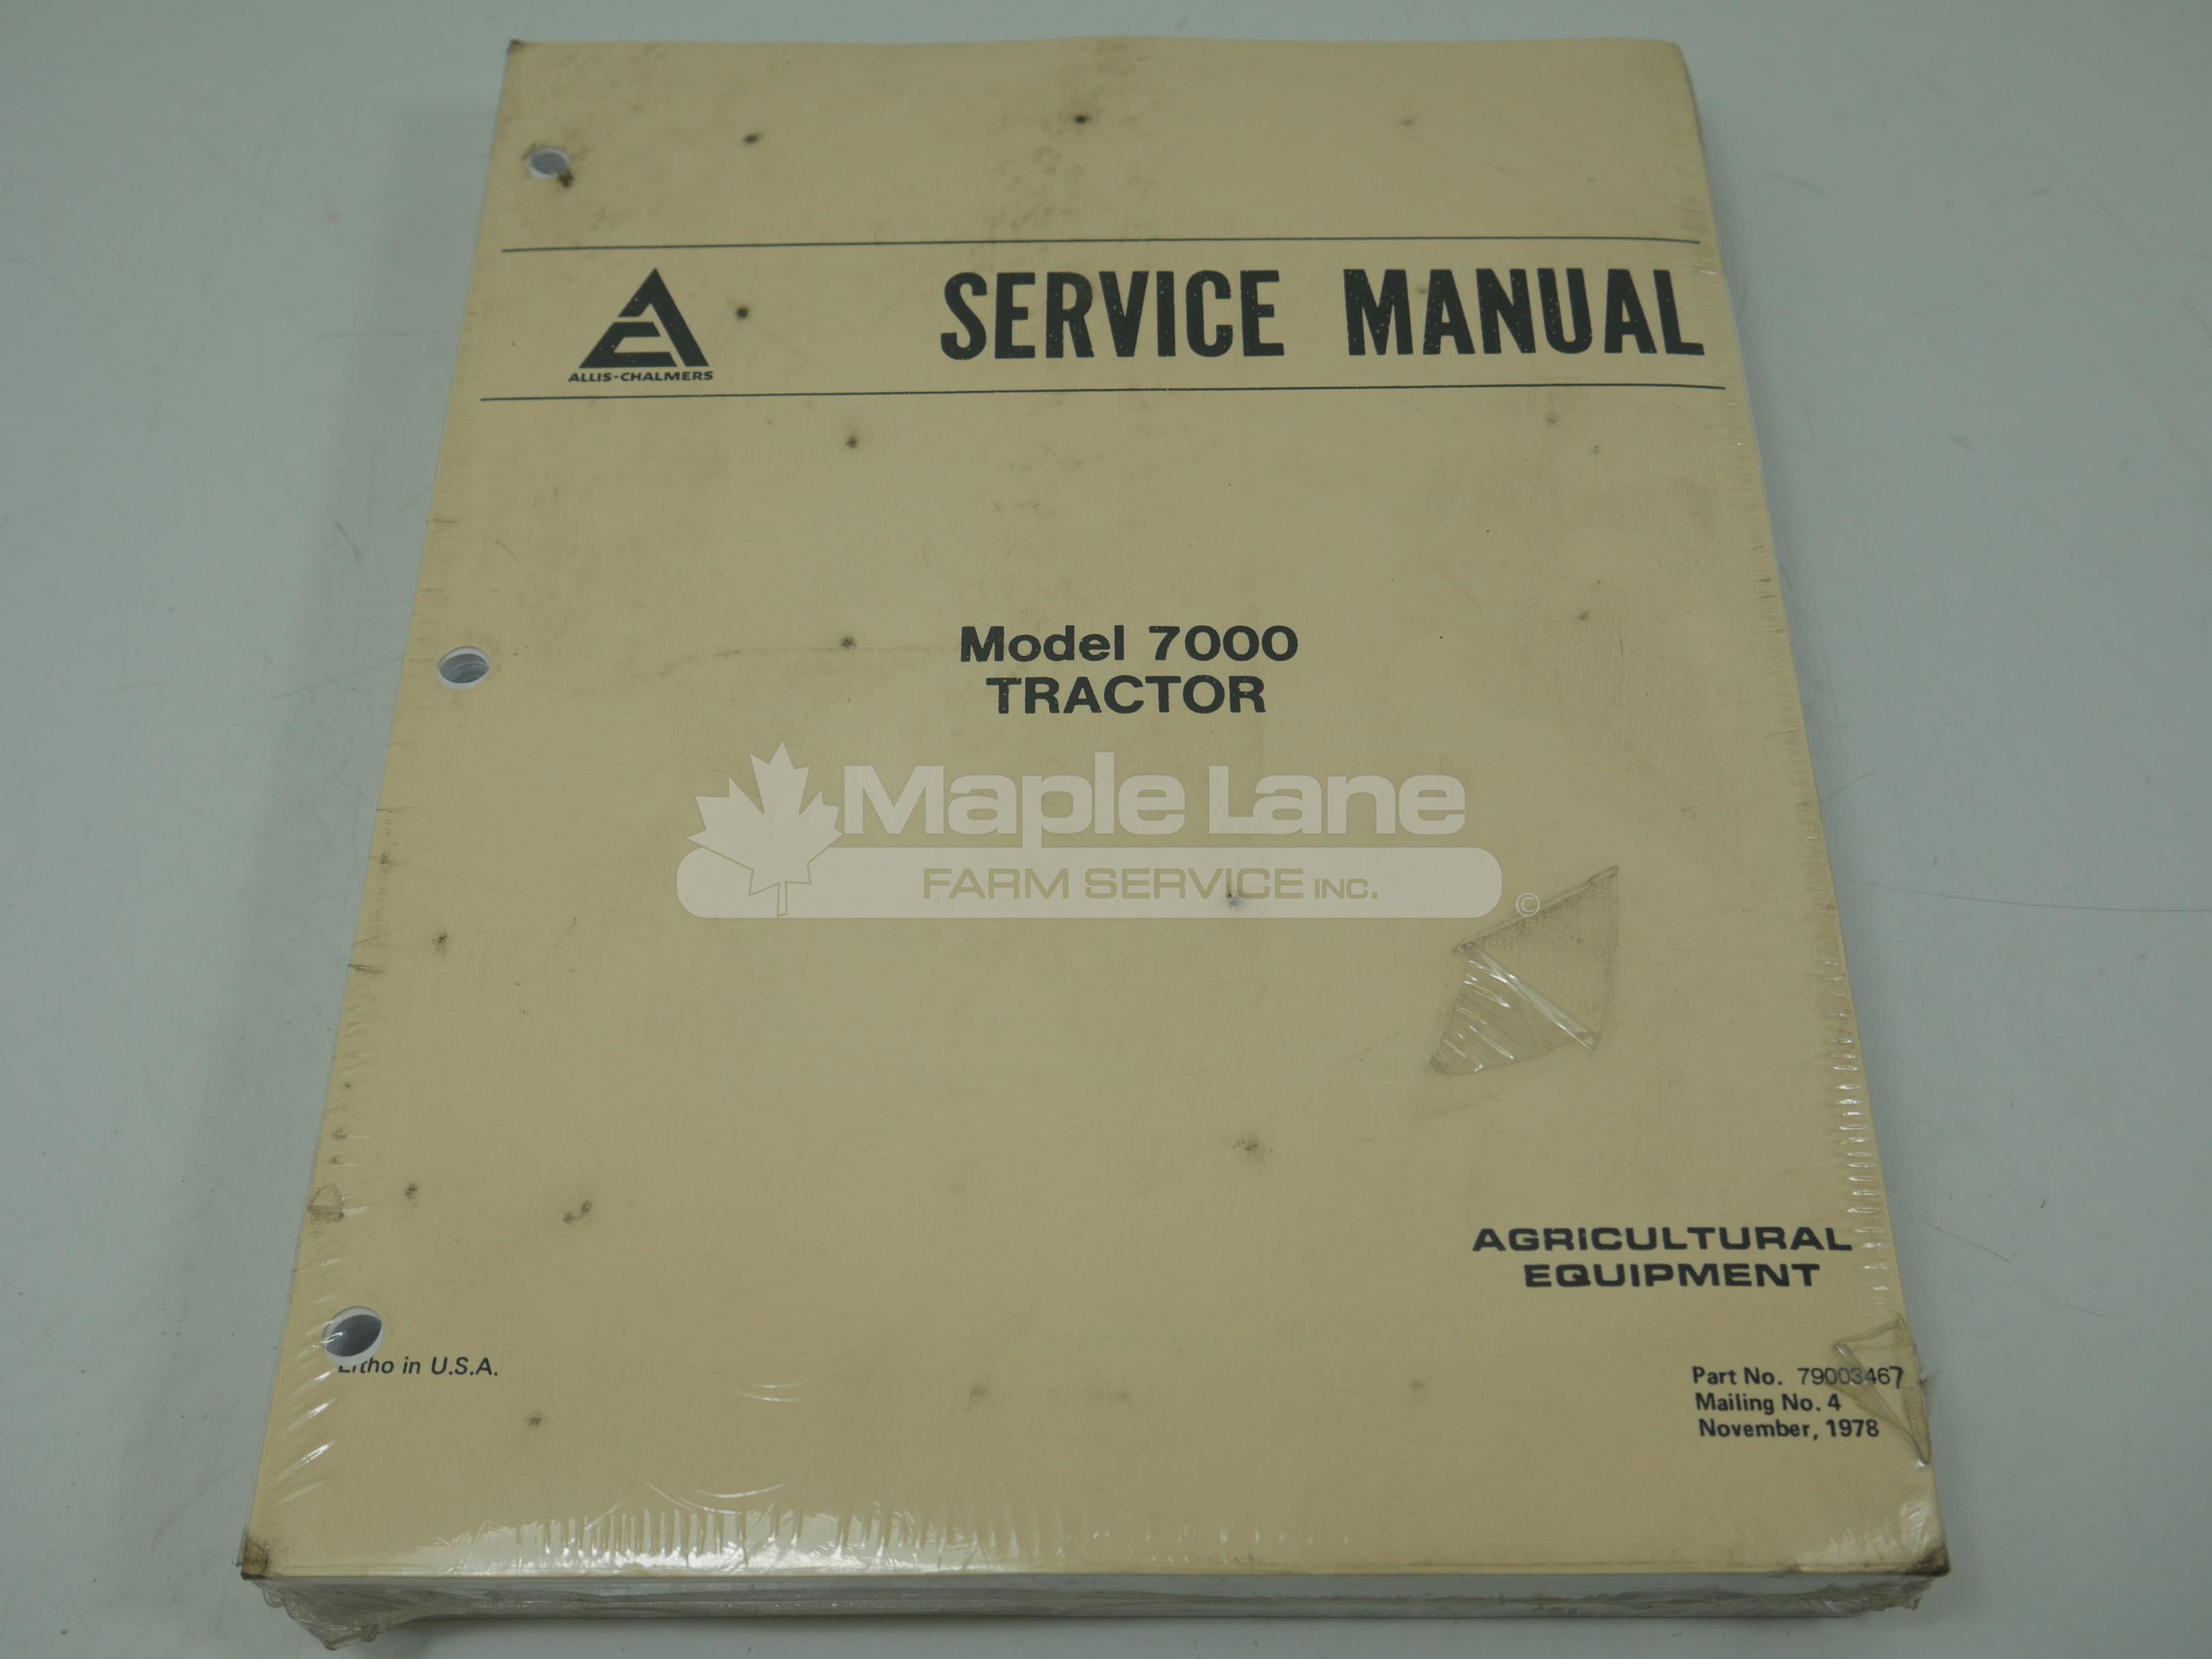 79003467 Service Manual